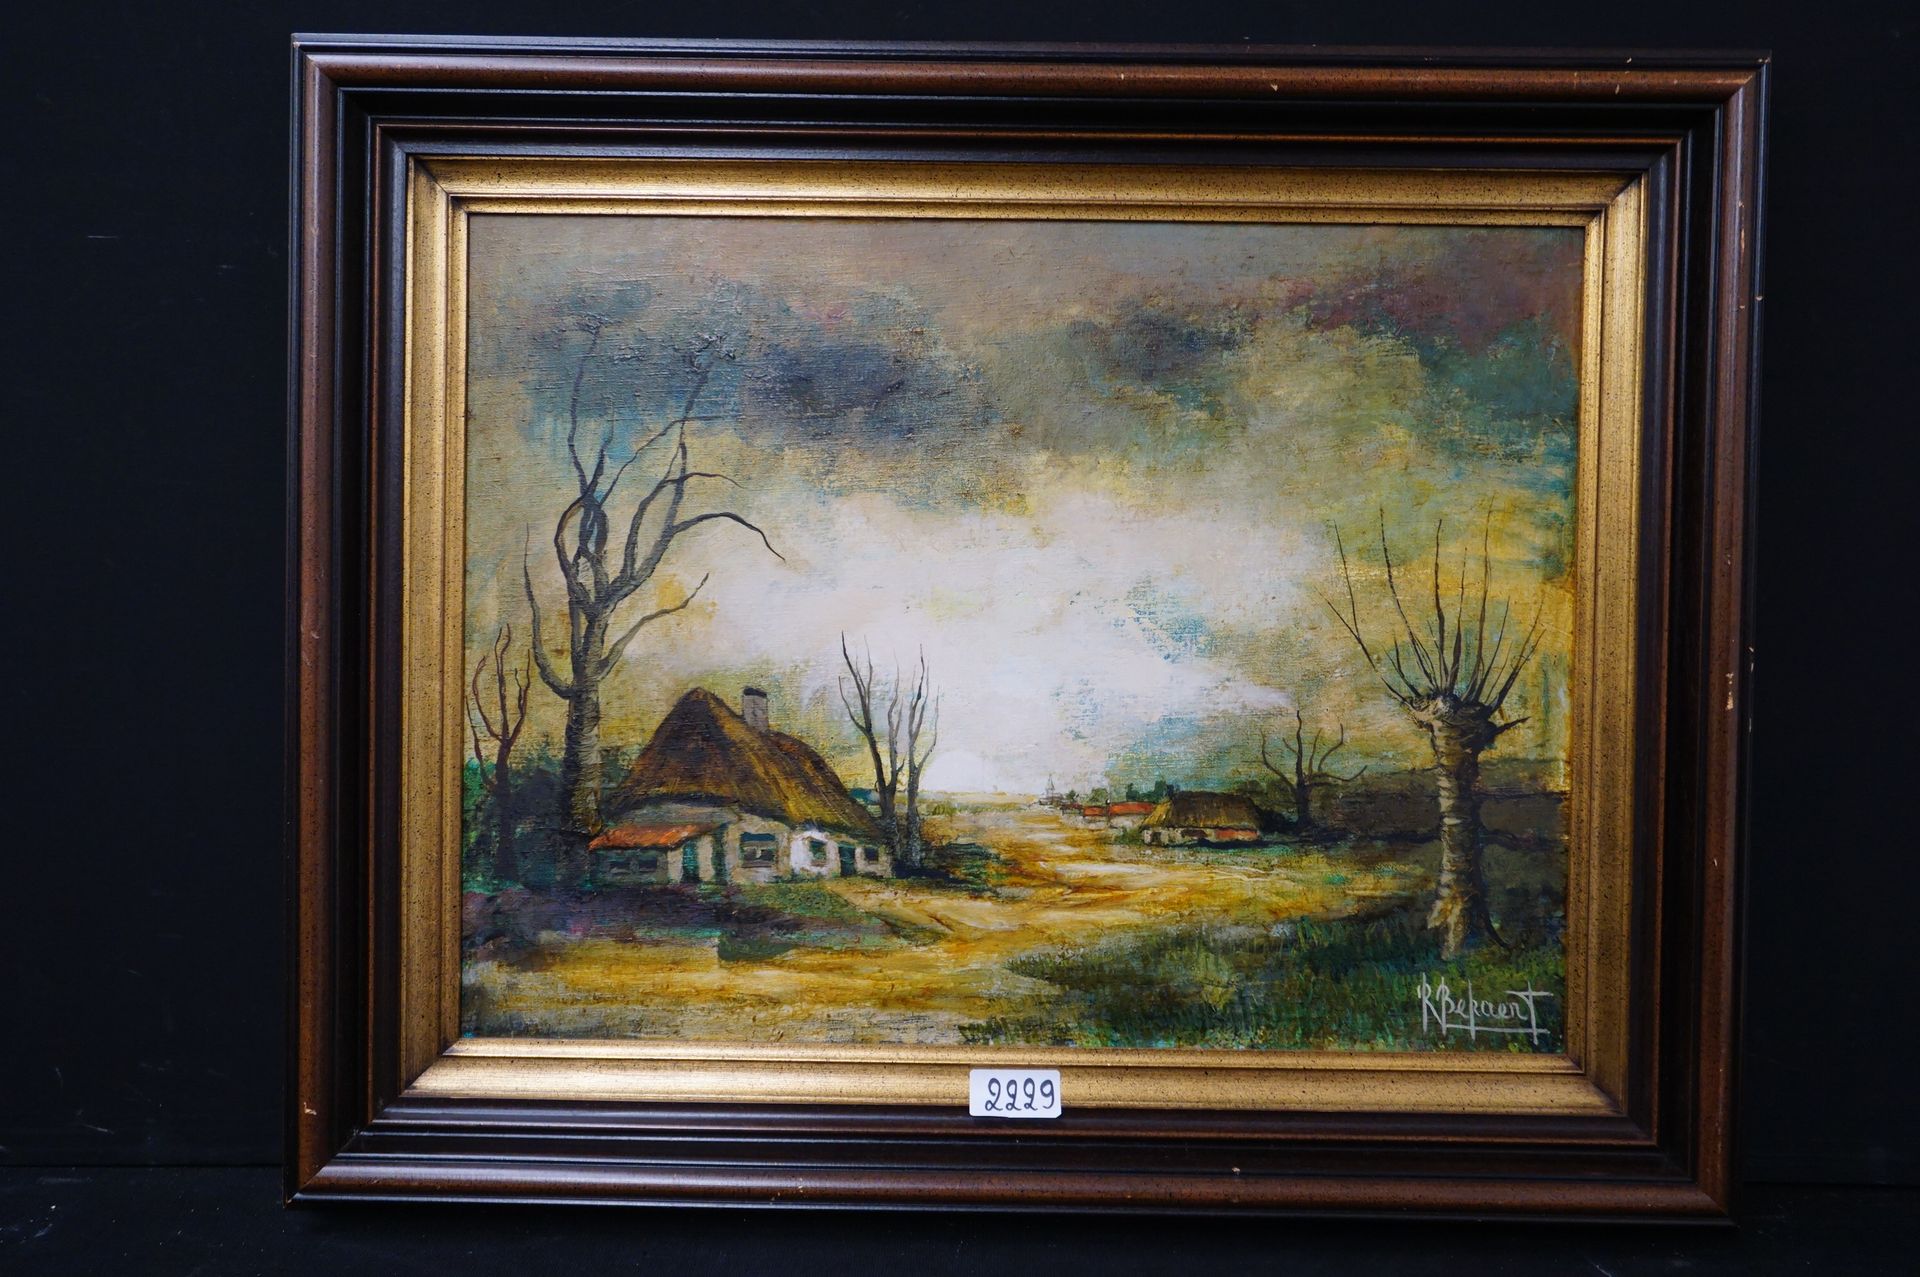 R. BEKAERT "有山寨树的风景" - 布面油画 - 已签名 - 60 x 80 cm